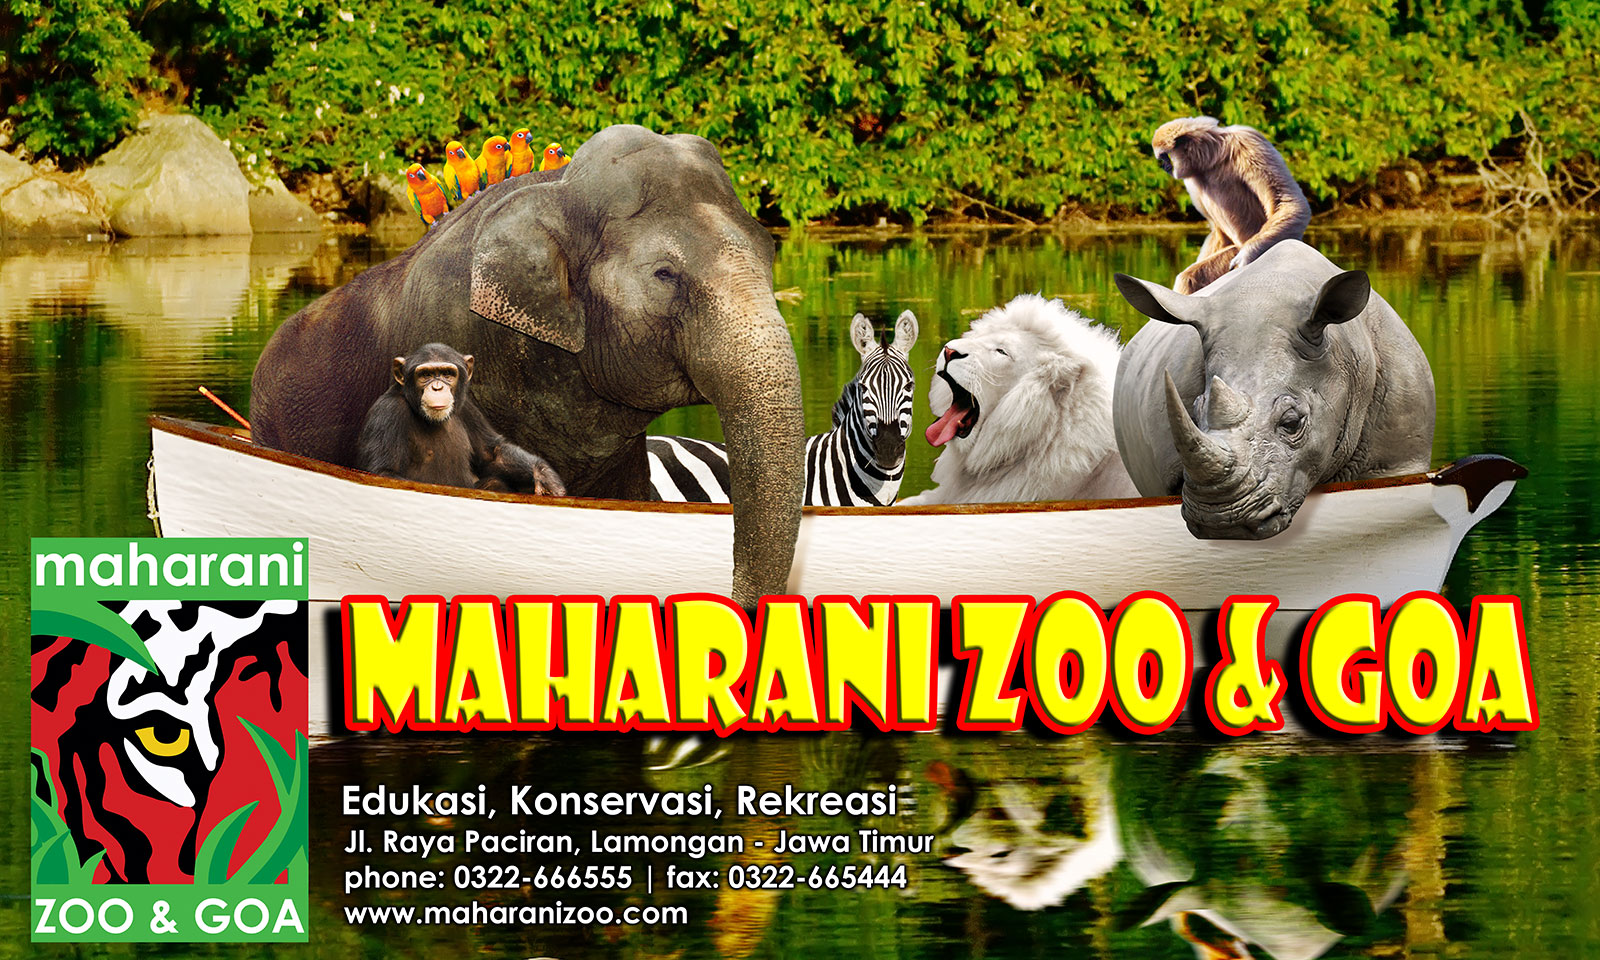 Maharani Zoo & Goa Photo